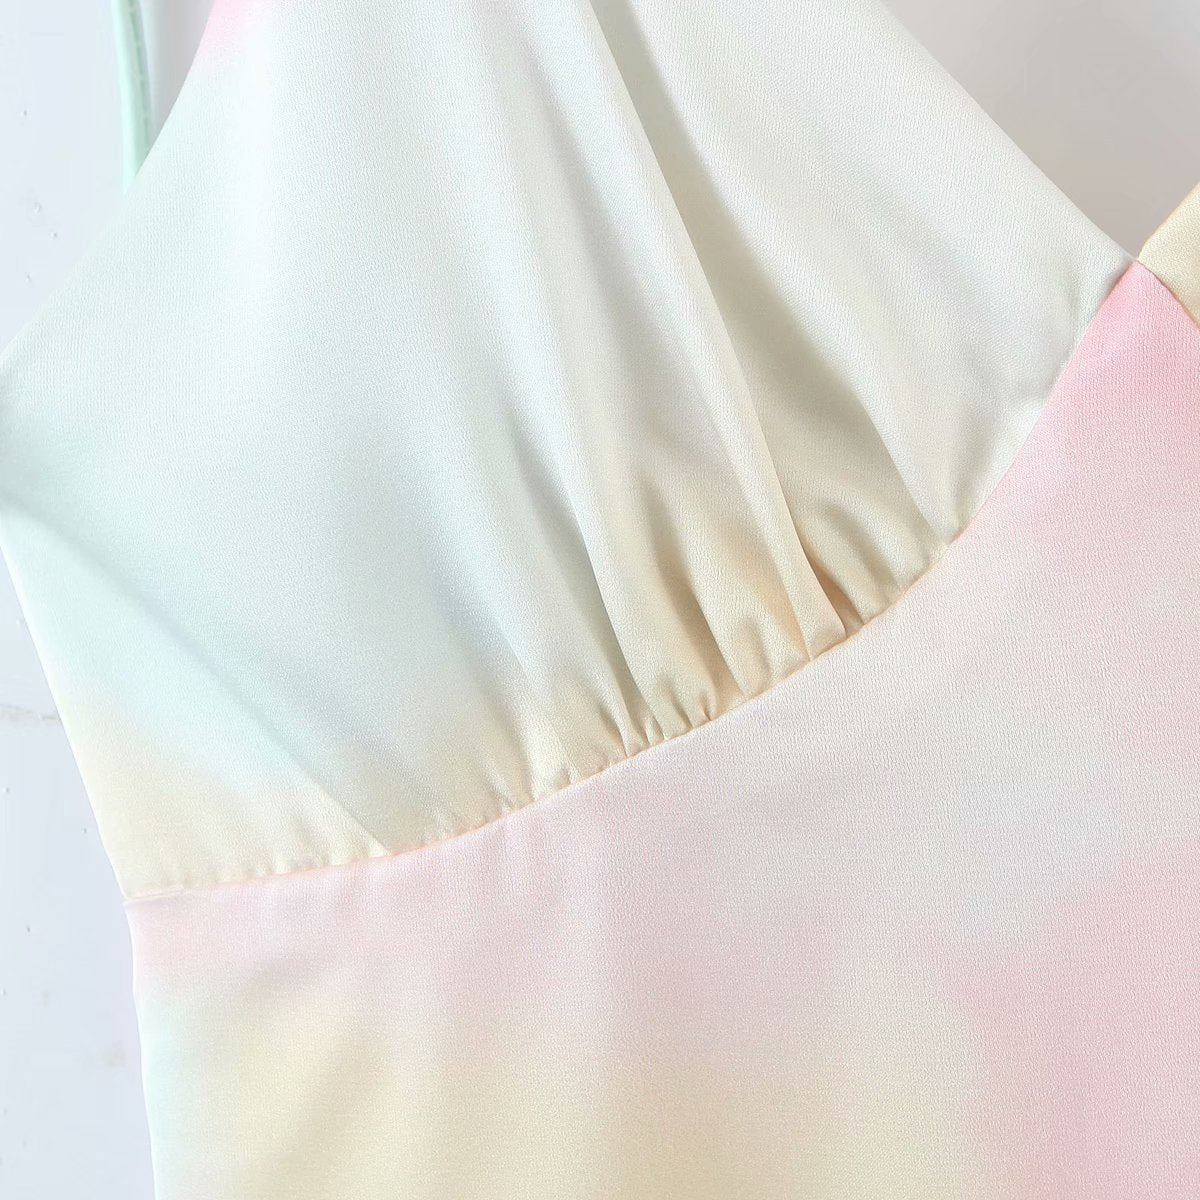 Soft Girl Tie Dye Print Mini Dress